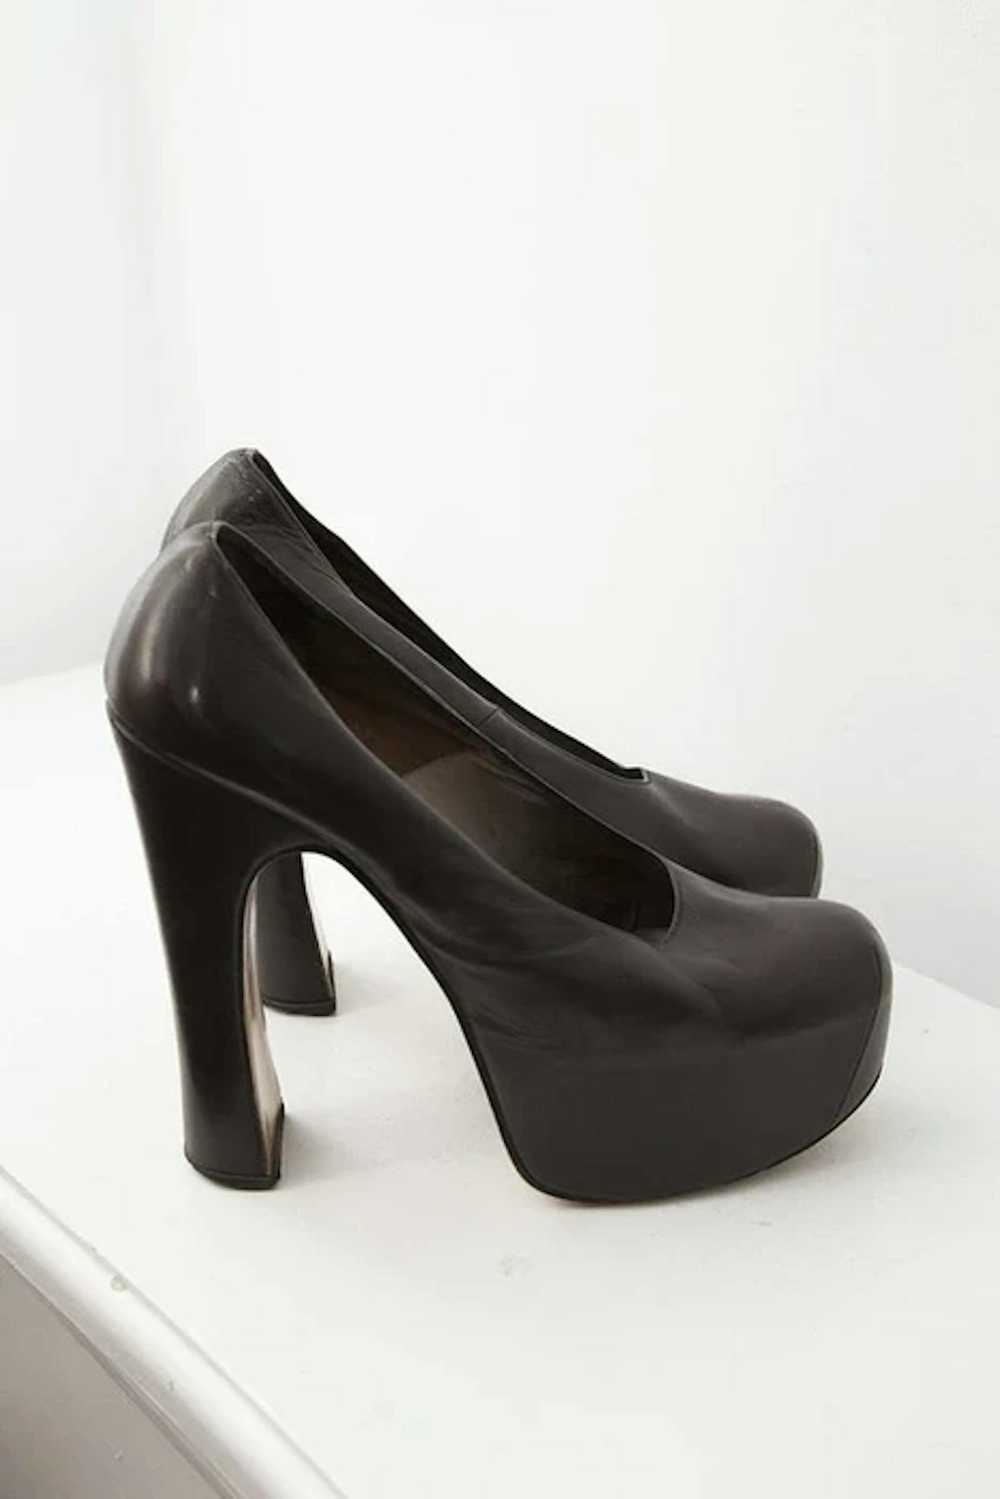 Vivienne Westwood 90's Court Platform heels - image 3